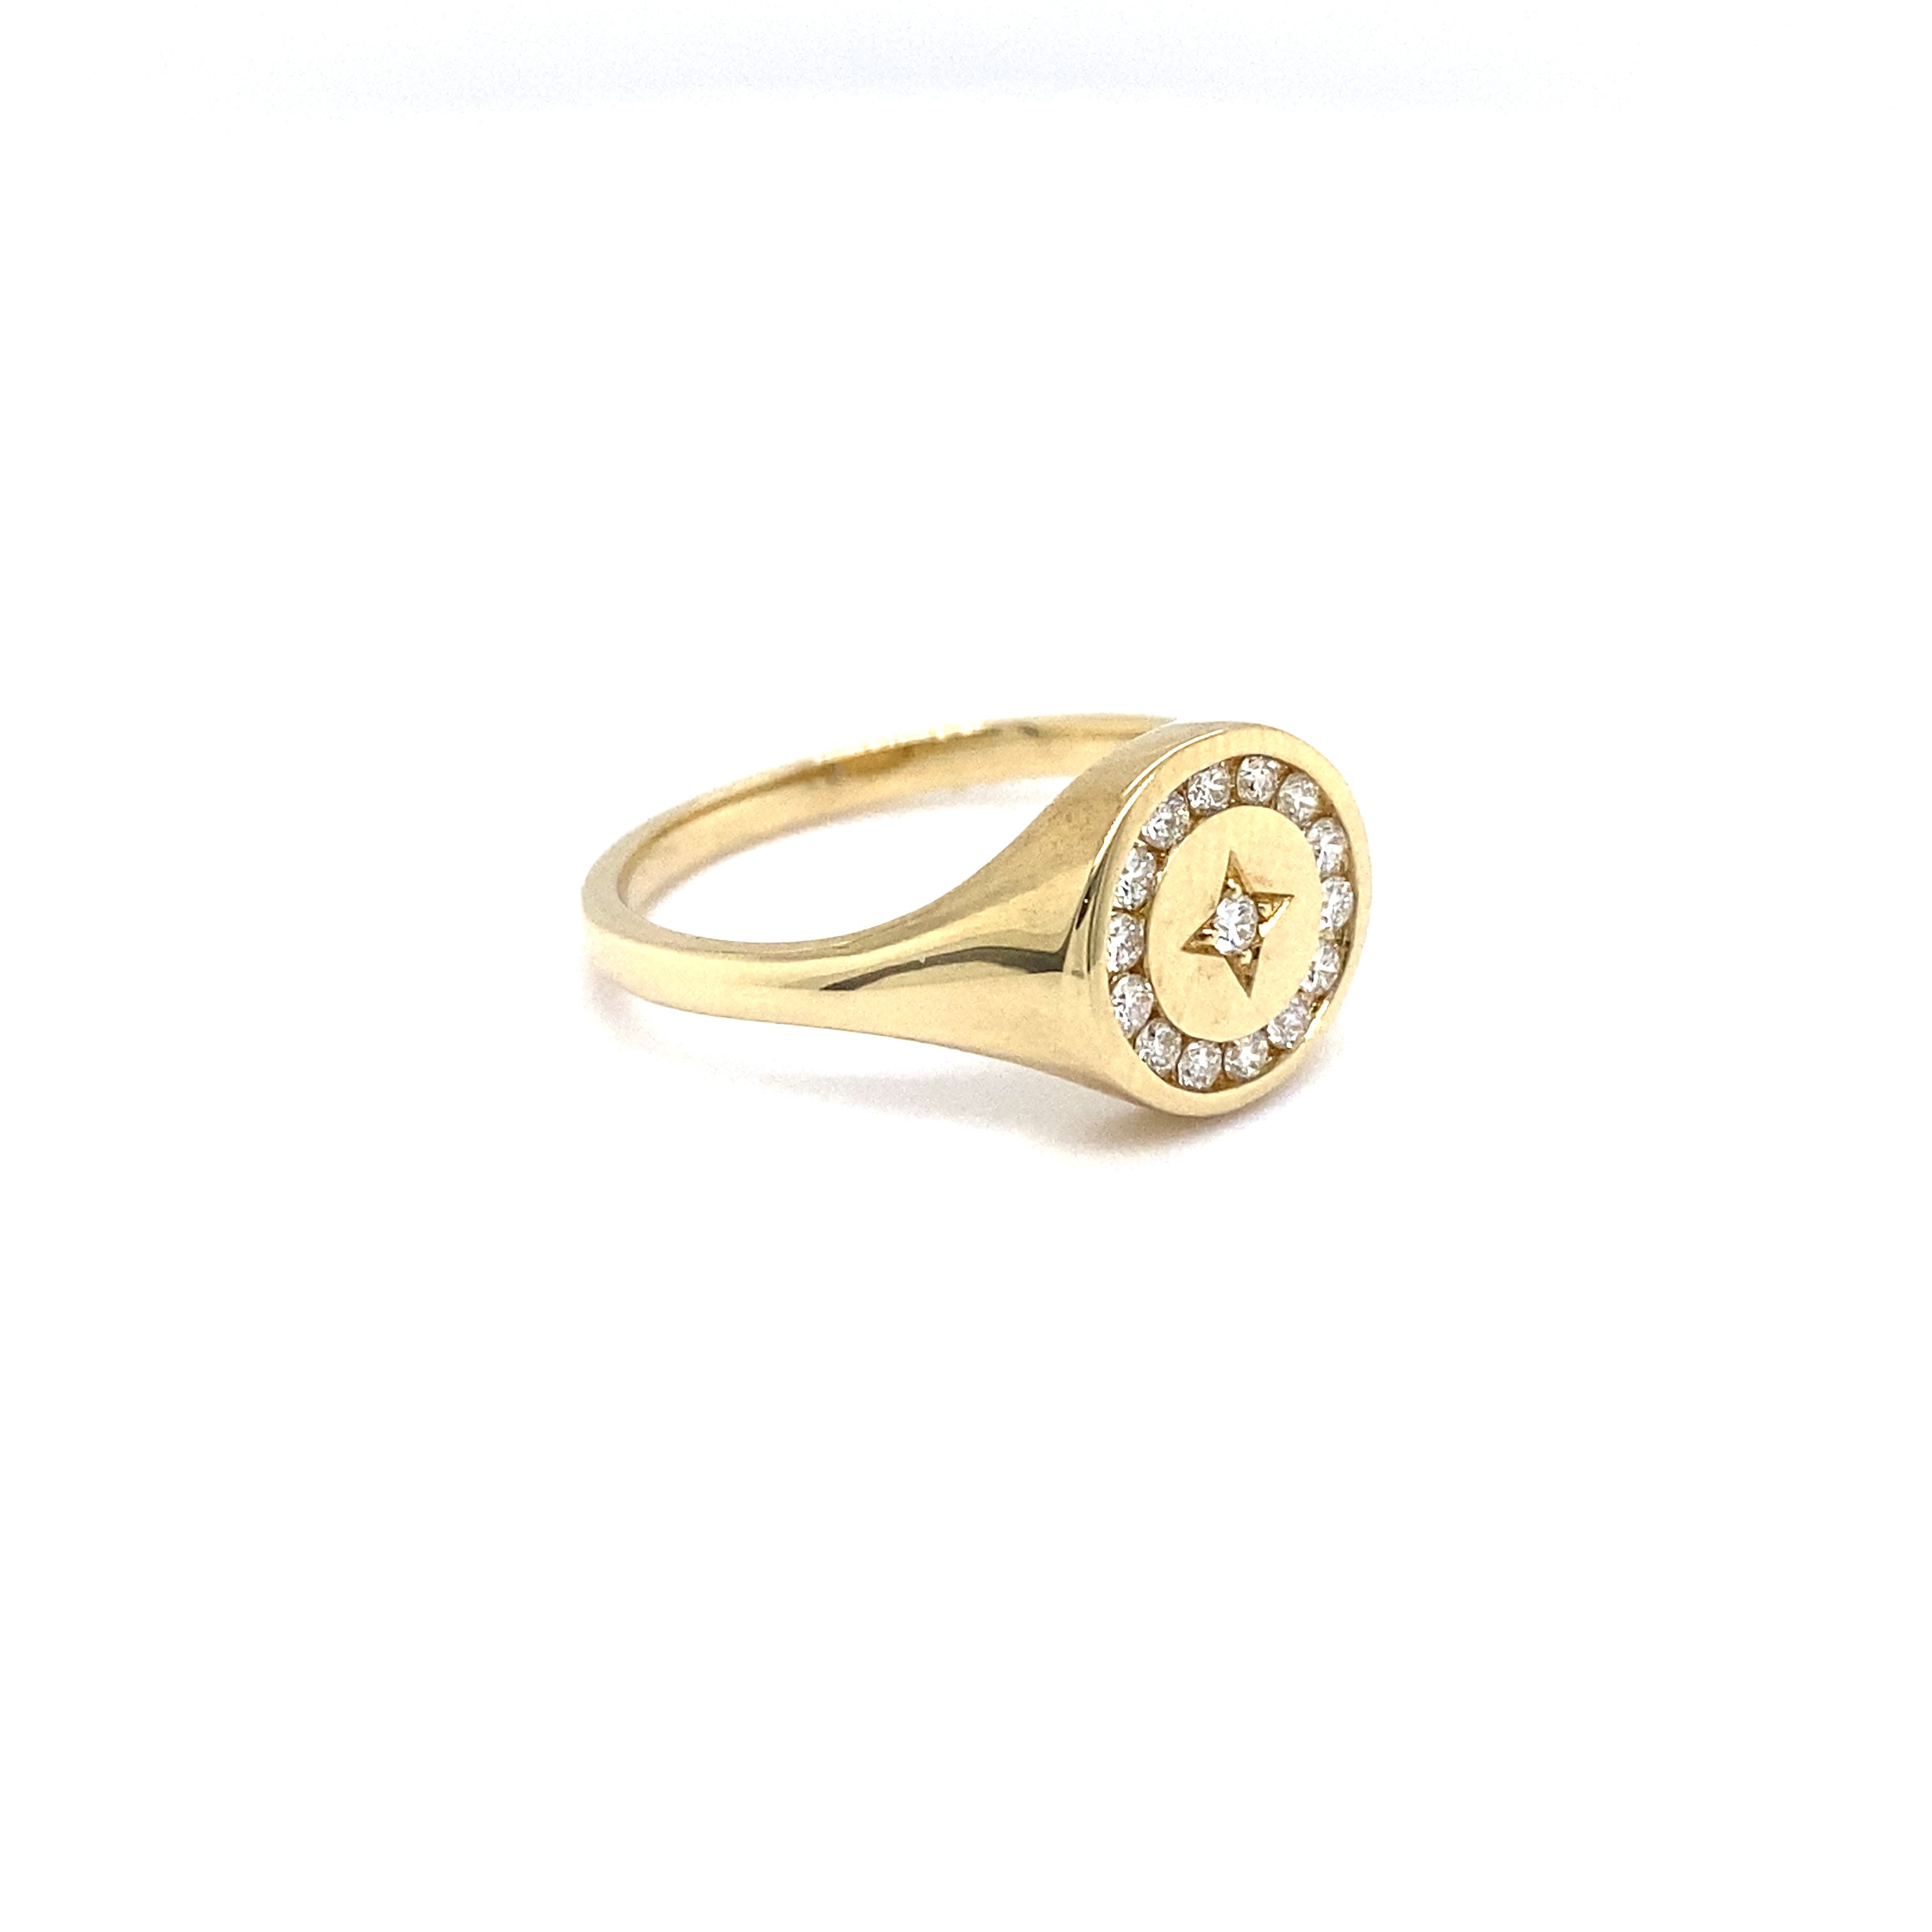 9ct yellow gold diamond signet ring.